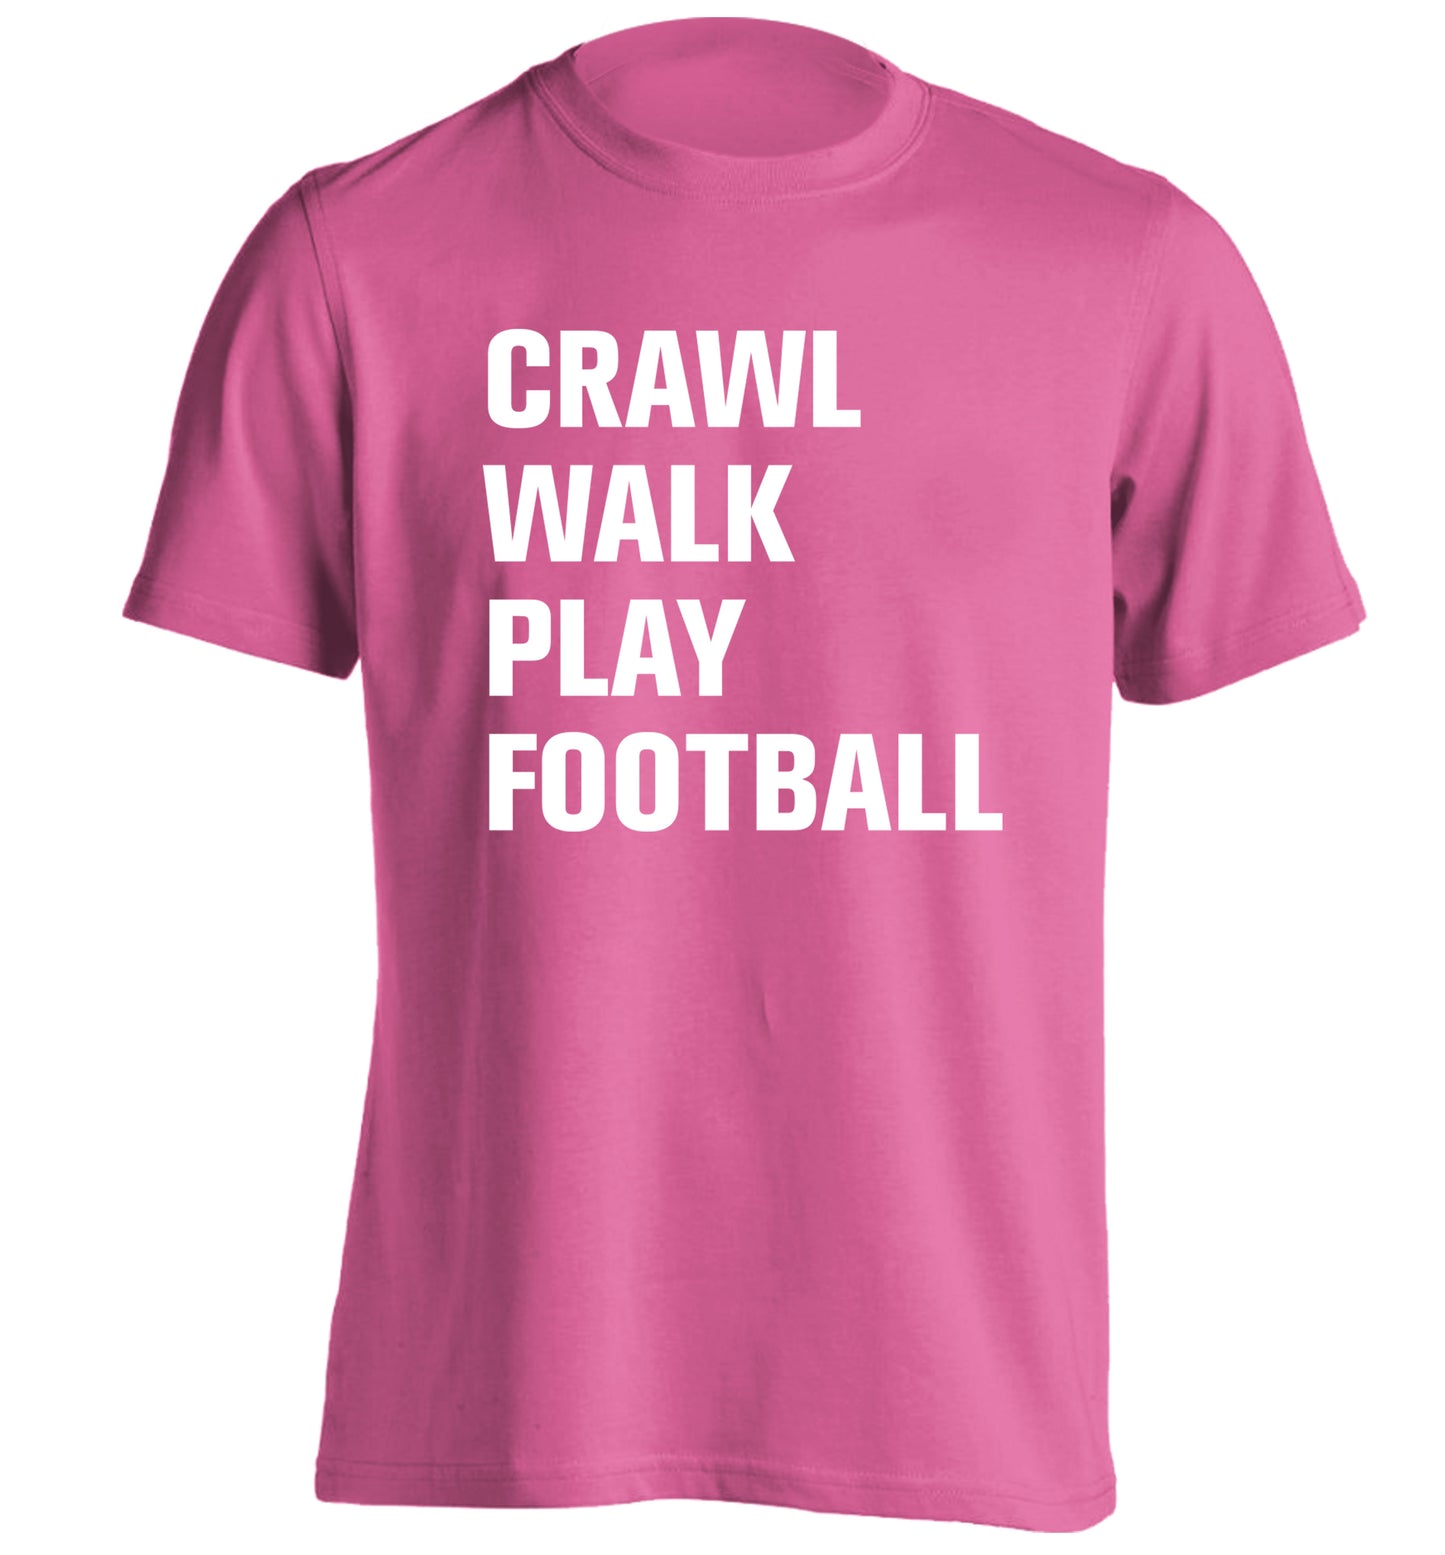 Crawl, walk, play football adults unisex pink Tshirt 2XL